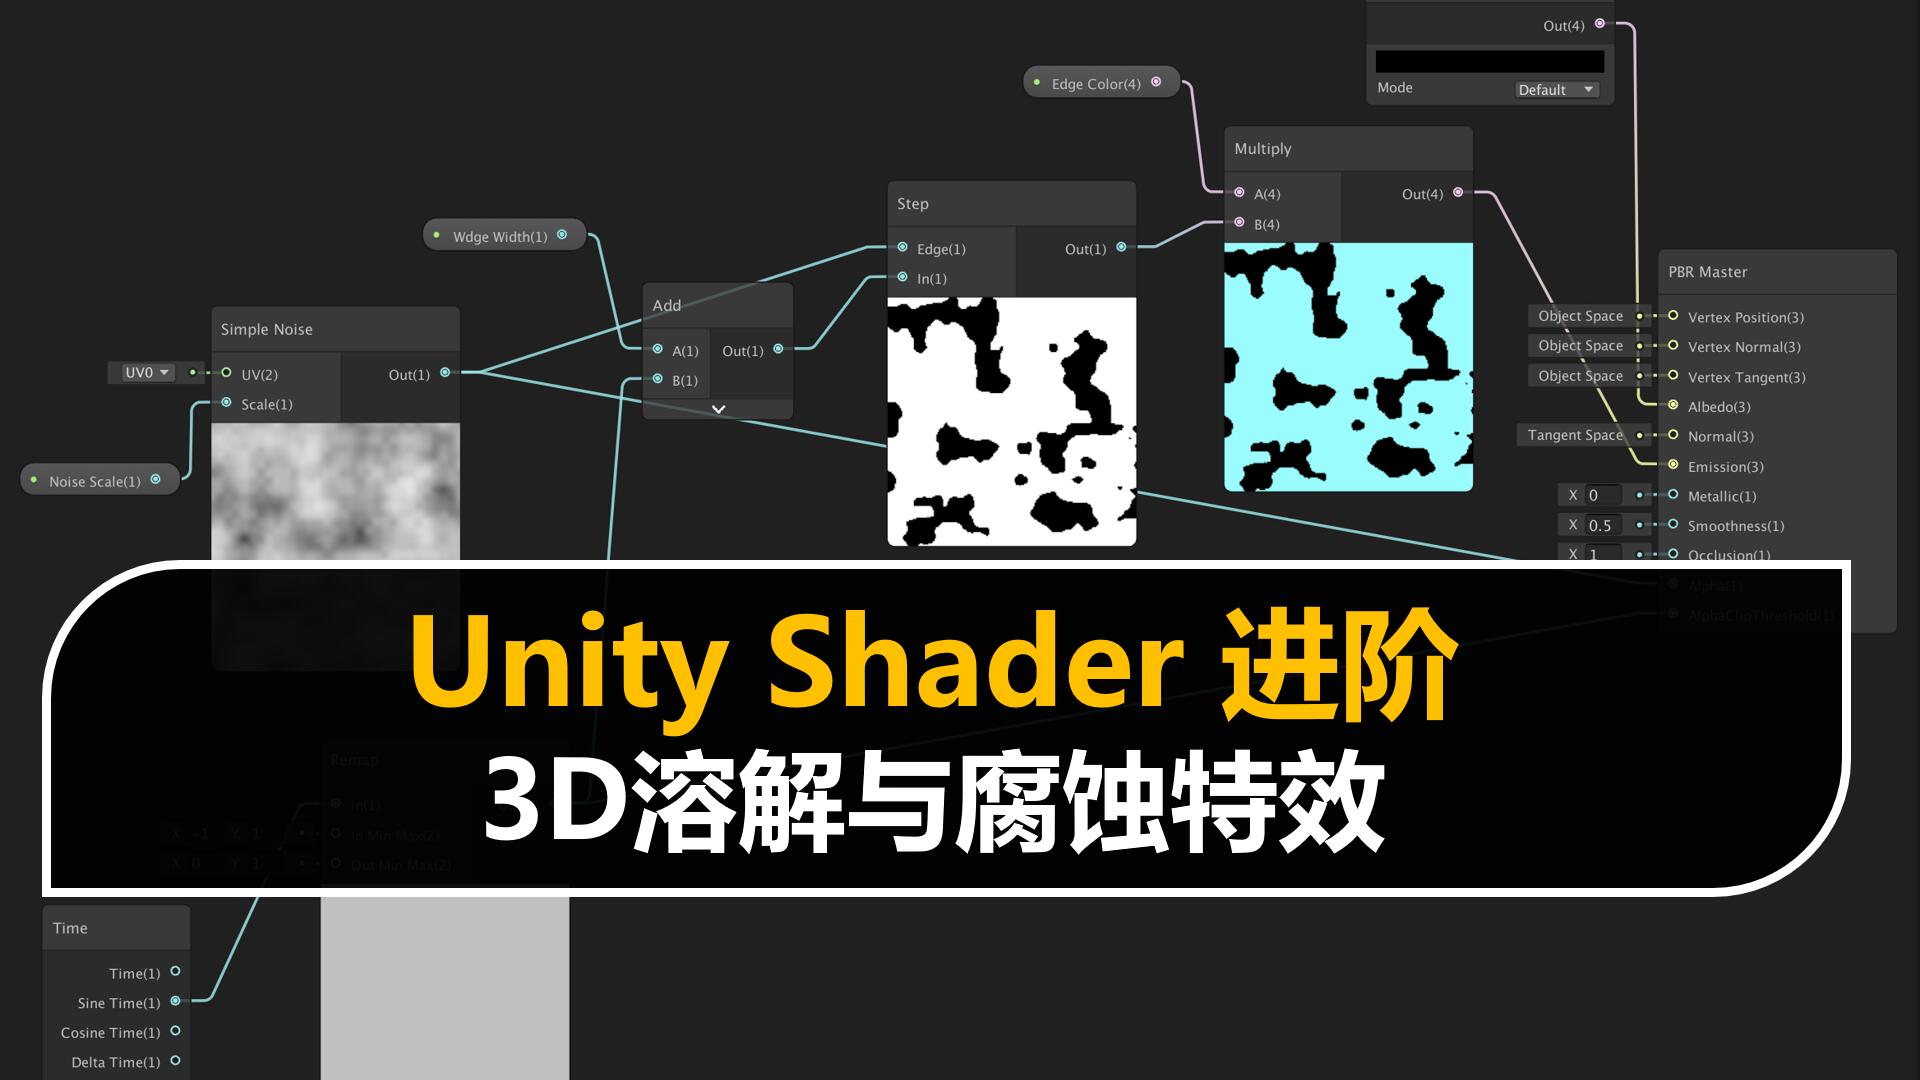 Unity Shader 进阶:3D溶解与腐蚀特效